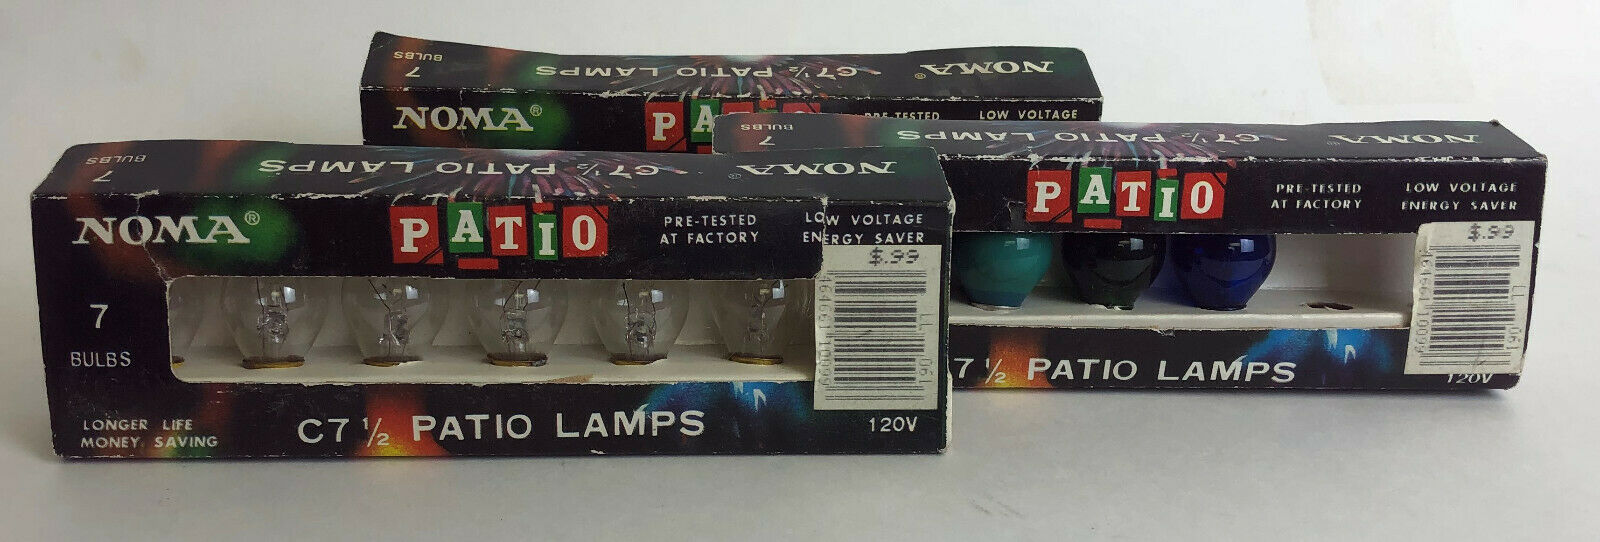 NOMA C7 1/2 PATIO LAMP BULBS (20) NOS